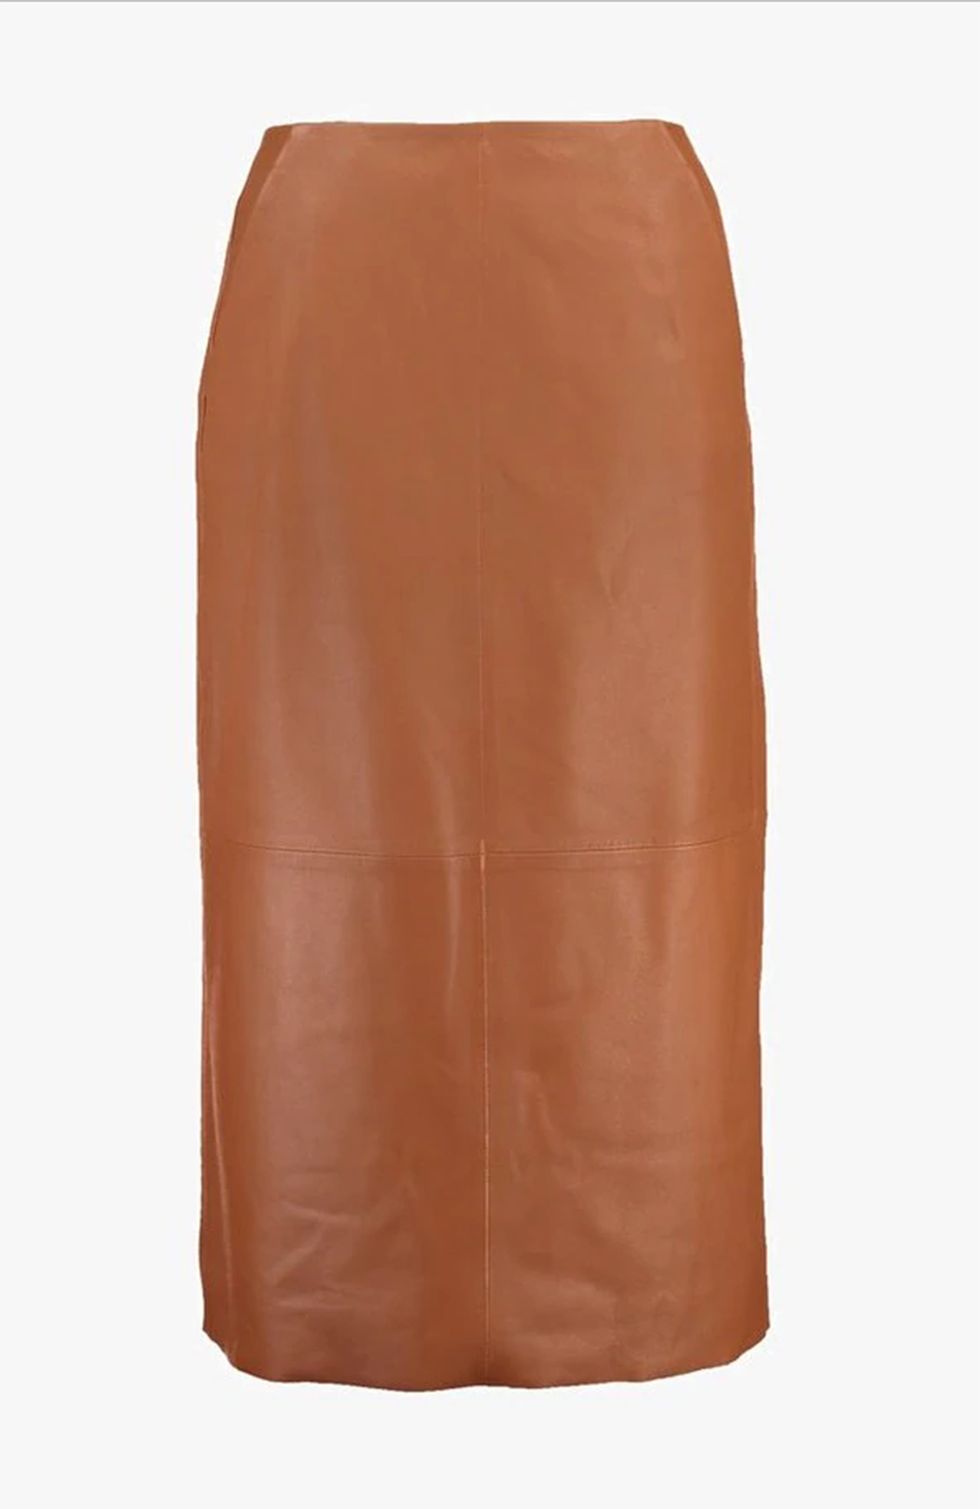 Pencil skirt, Orange, Clothing, Brown, Tan, Leather, Peach, Caramel color, A-line, 